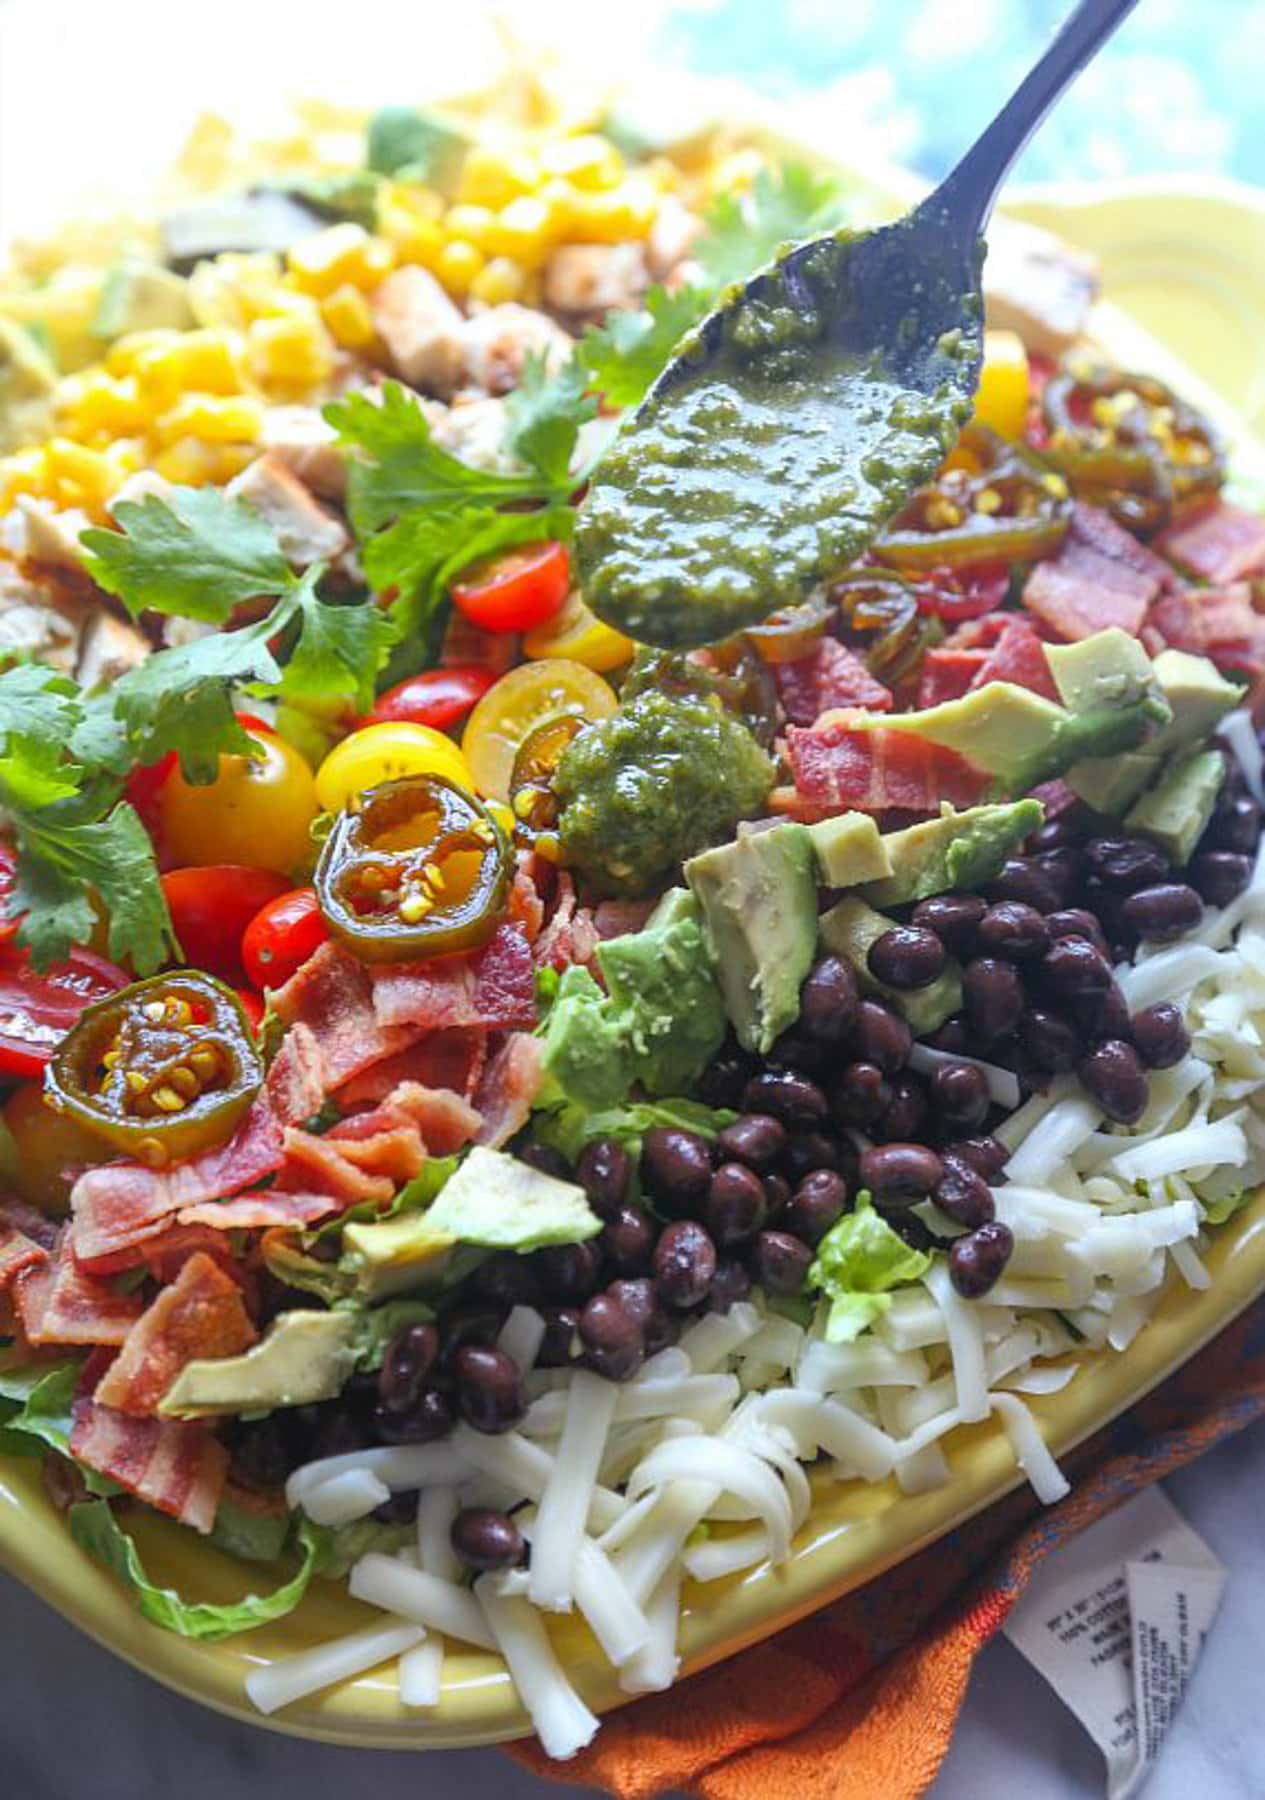 Southwest Cobb salad served on a platter with a vinaigrette 